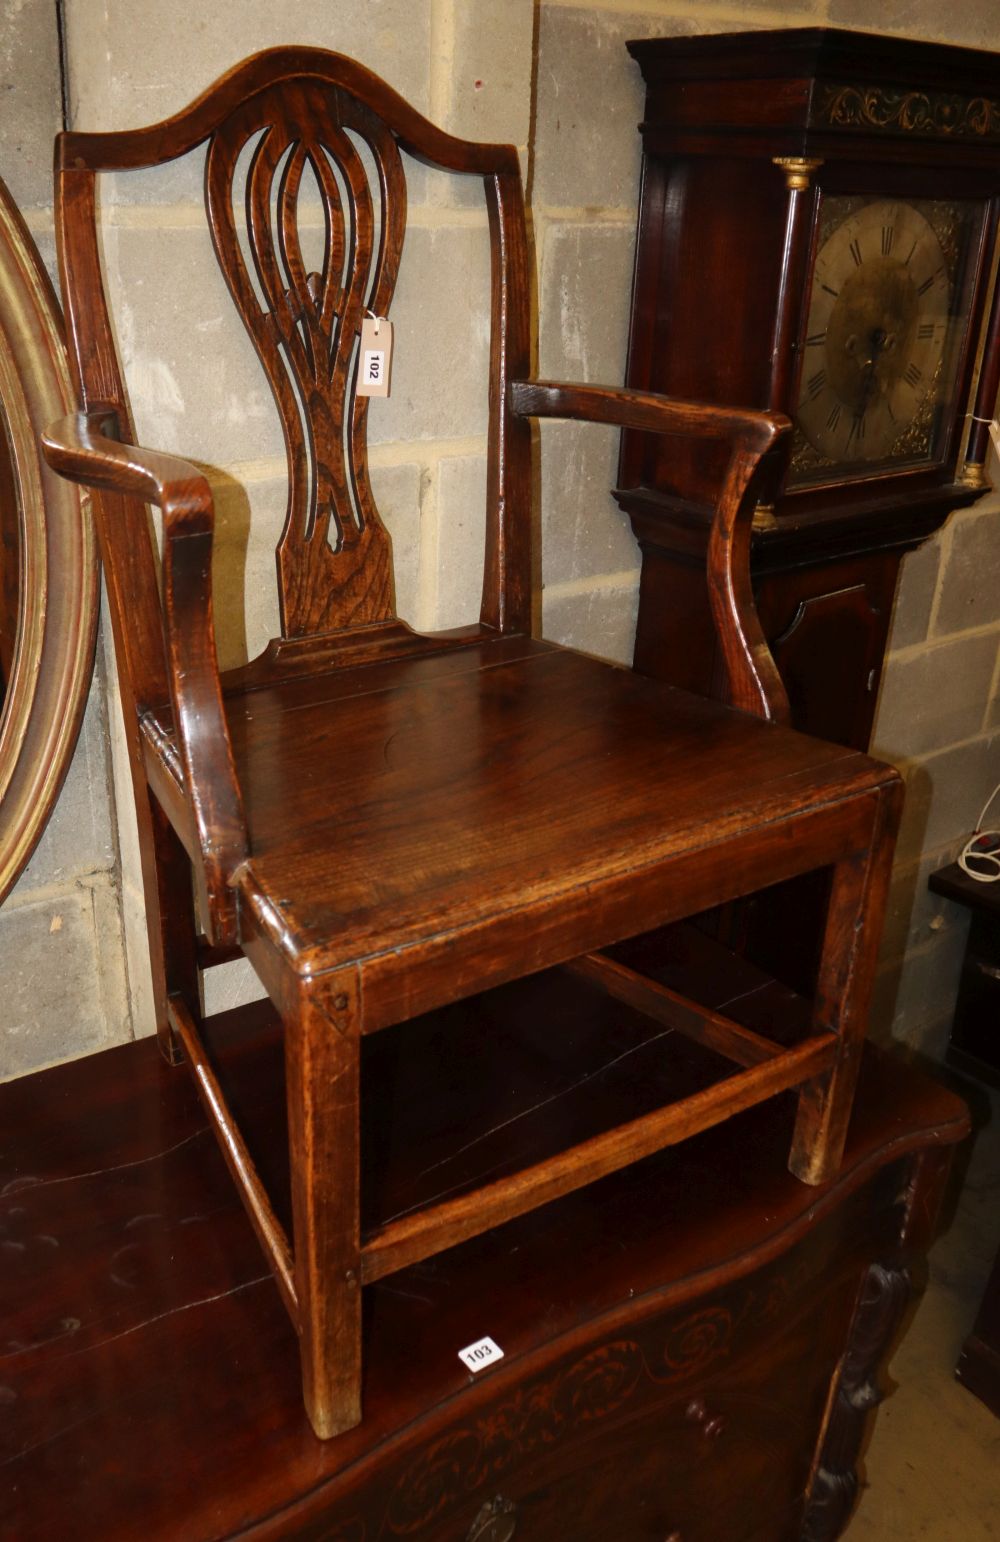 A George III provinical oak elbow chair